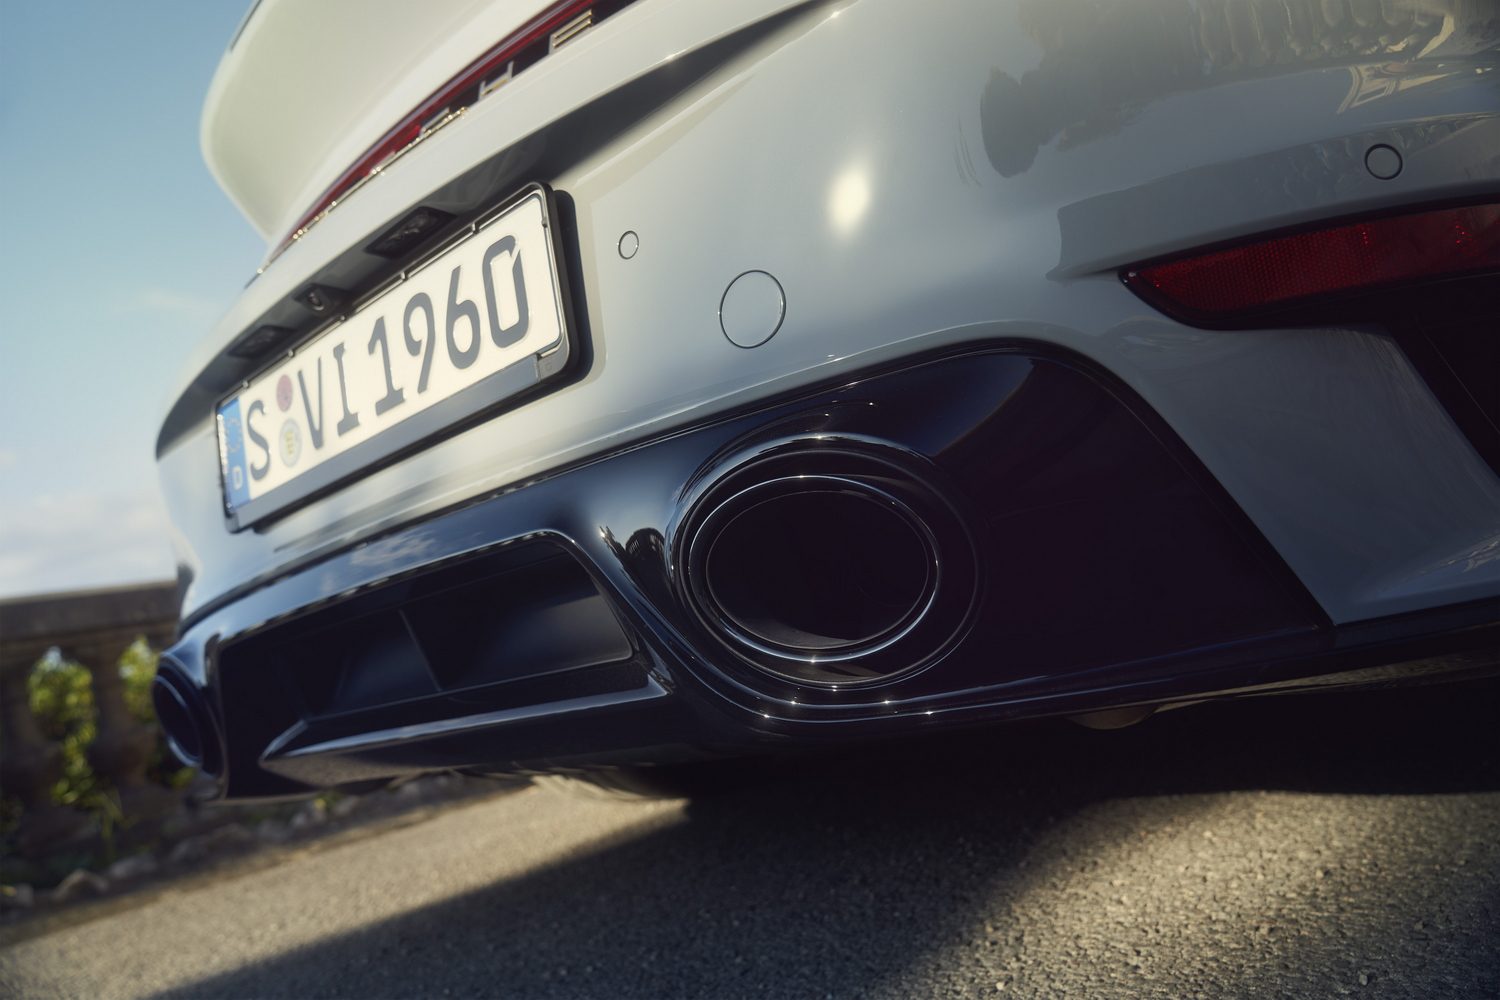 Porsche unveils retro 911 Sport Classic